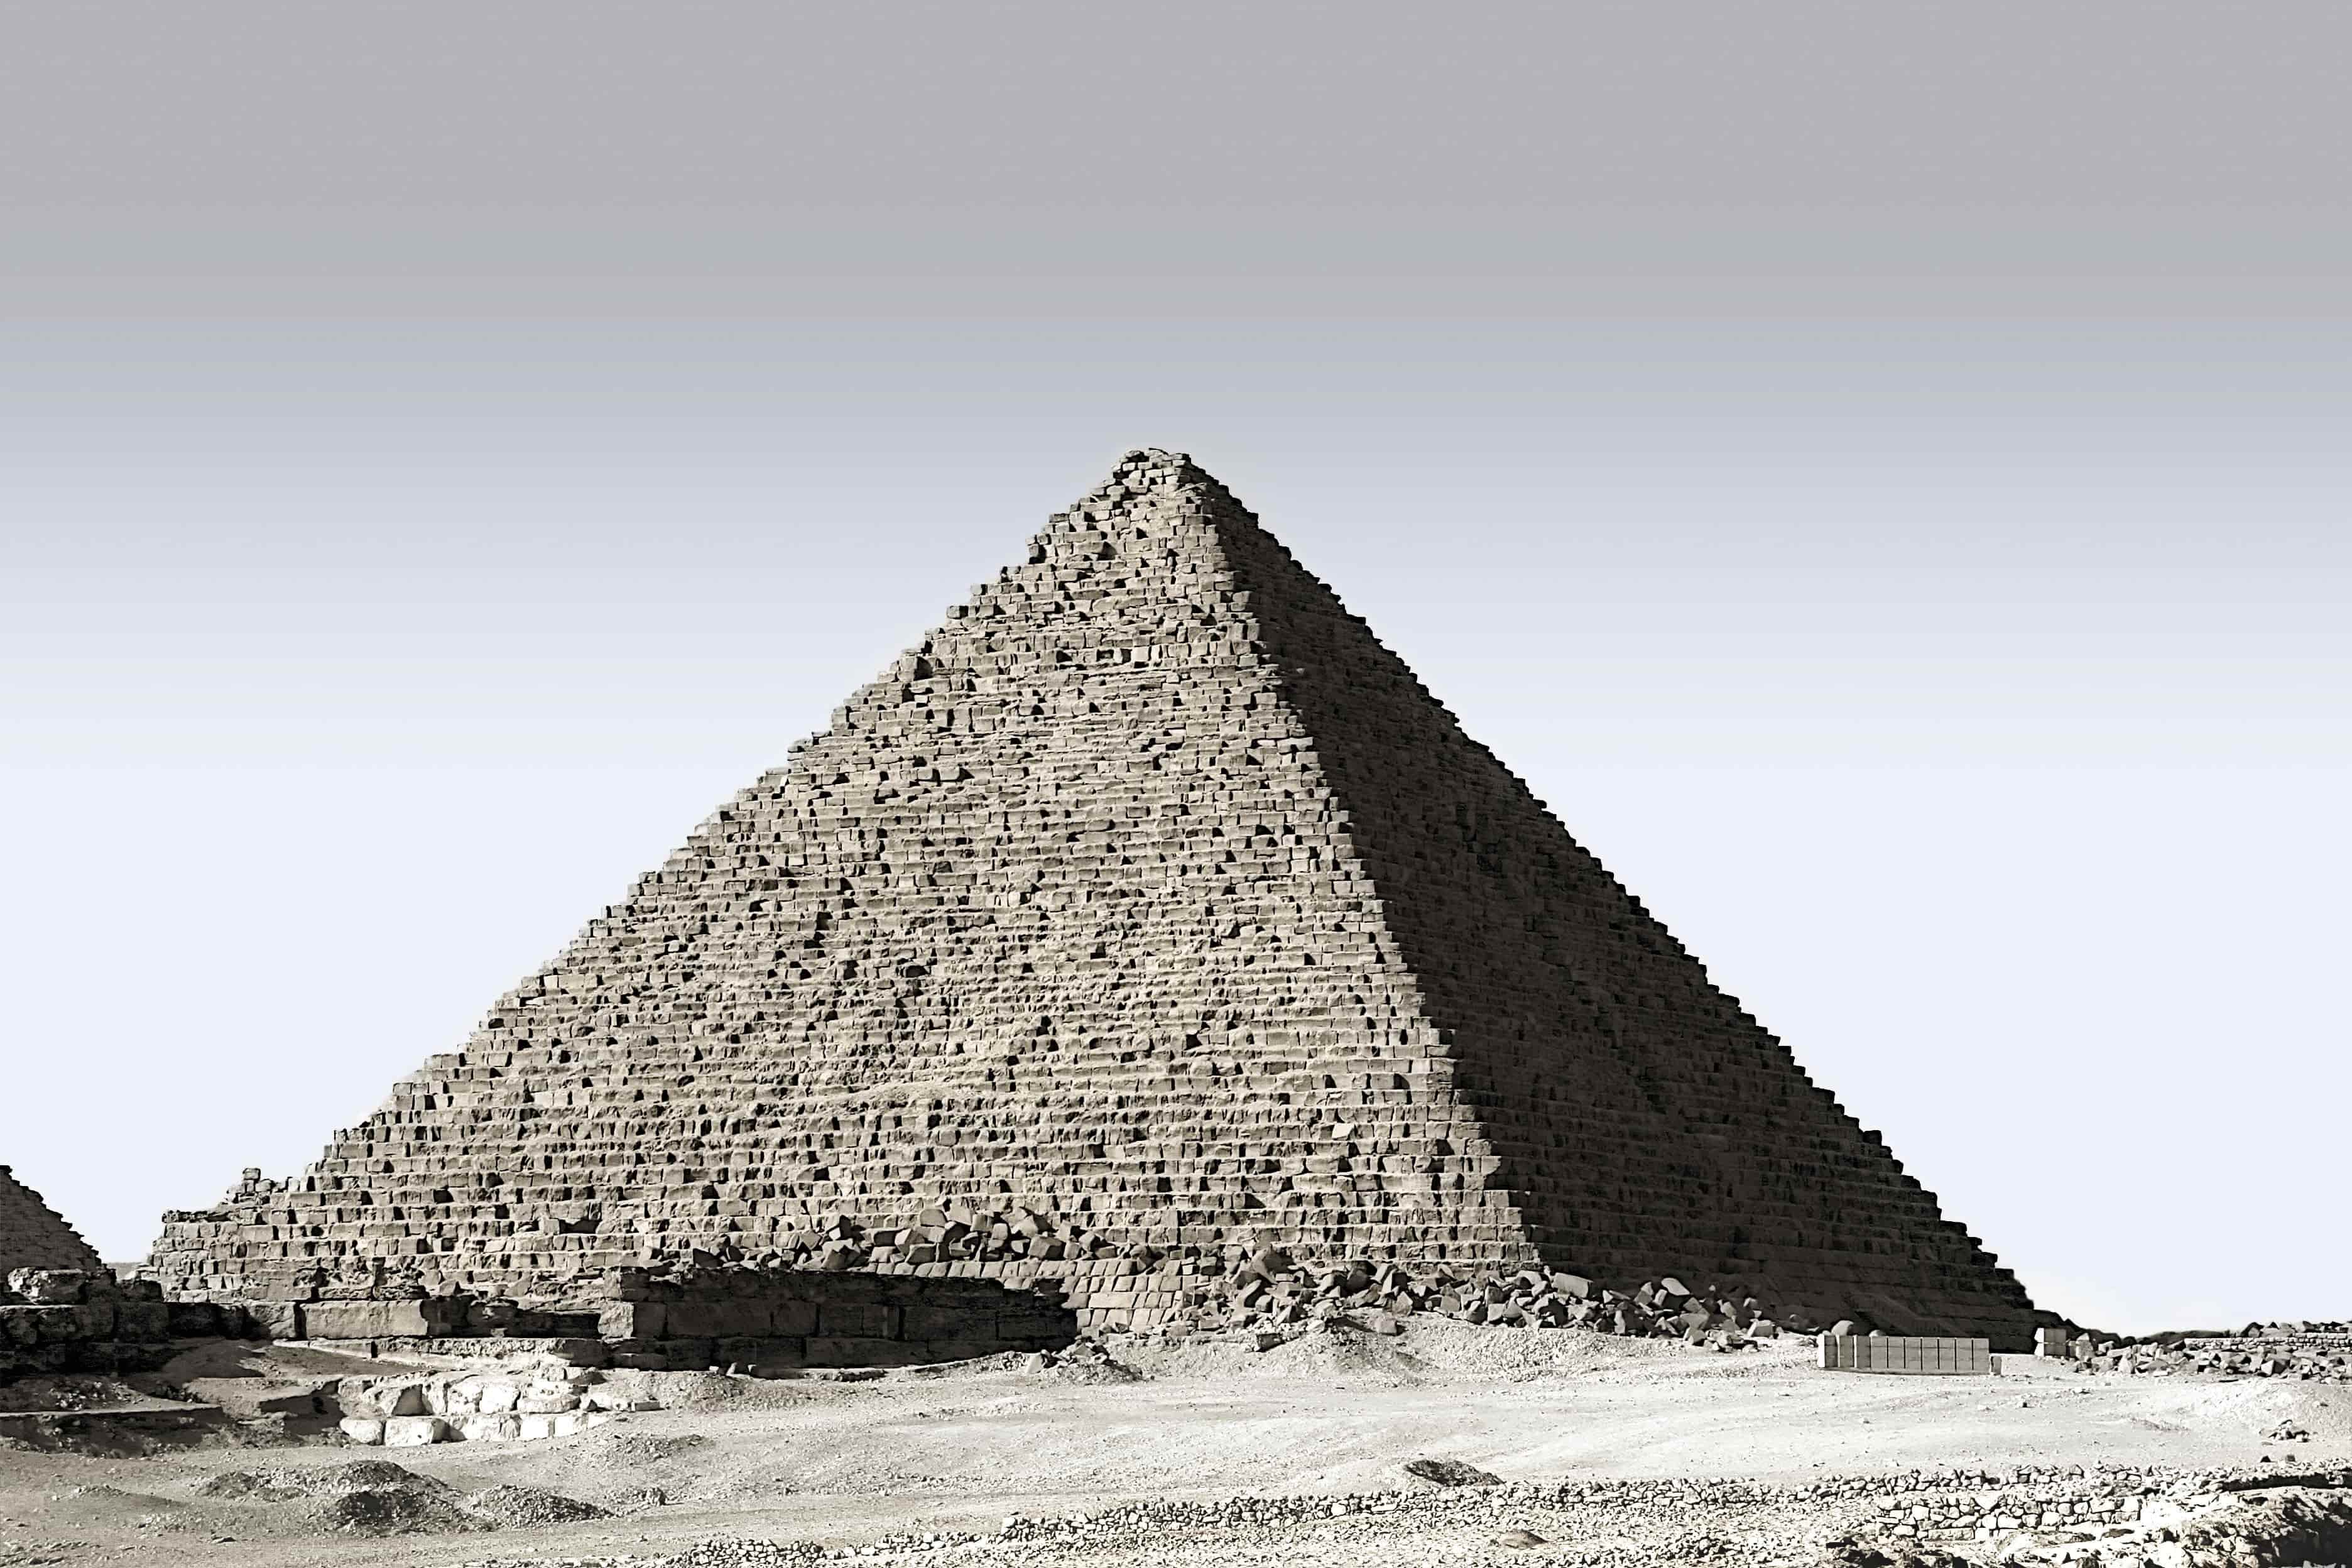 <div class="text_to_html">Egypt 2011</div>